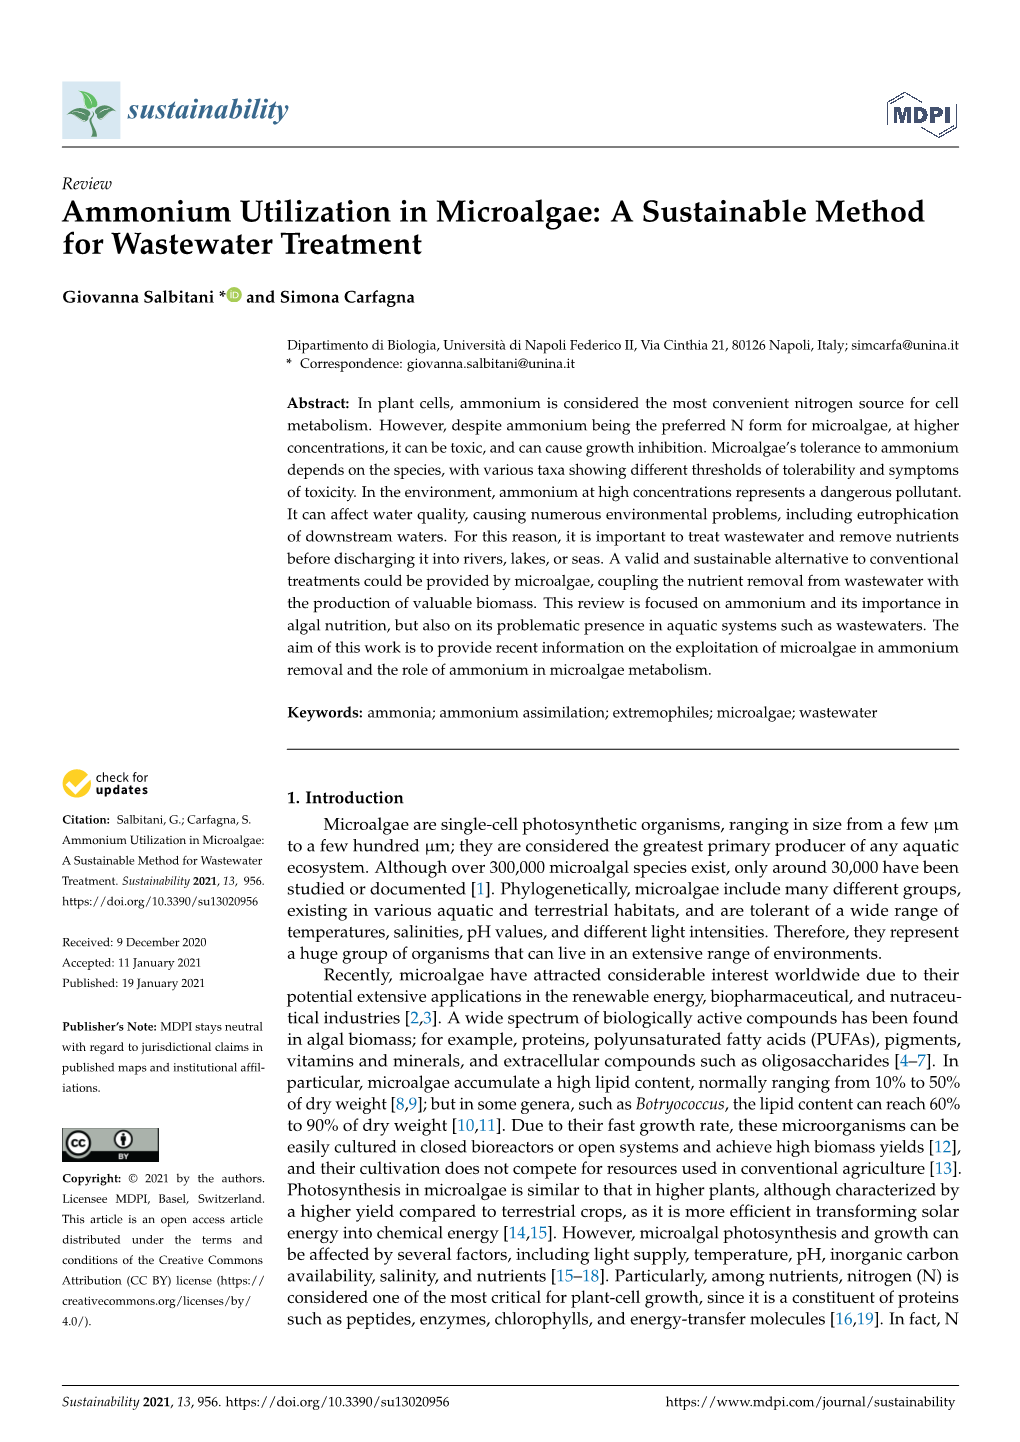 Ammonium Utilization in Microalgae: a Sustainable Method for Wastewater Treatment